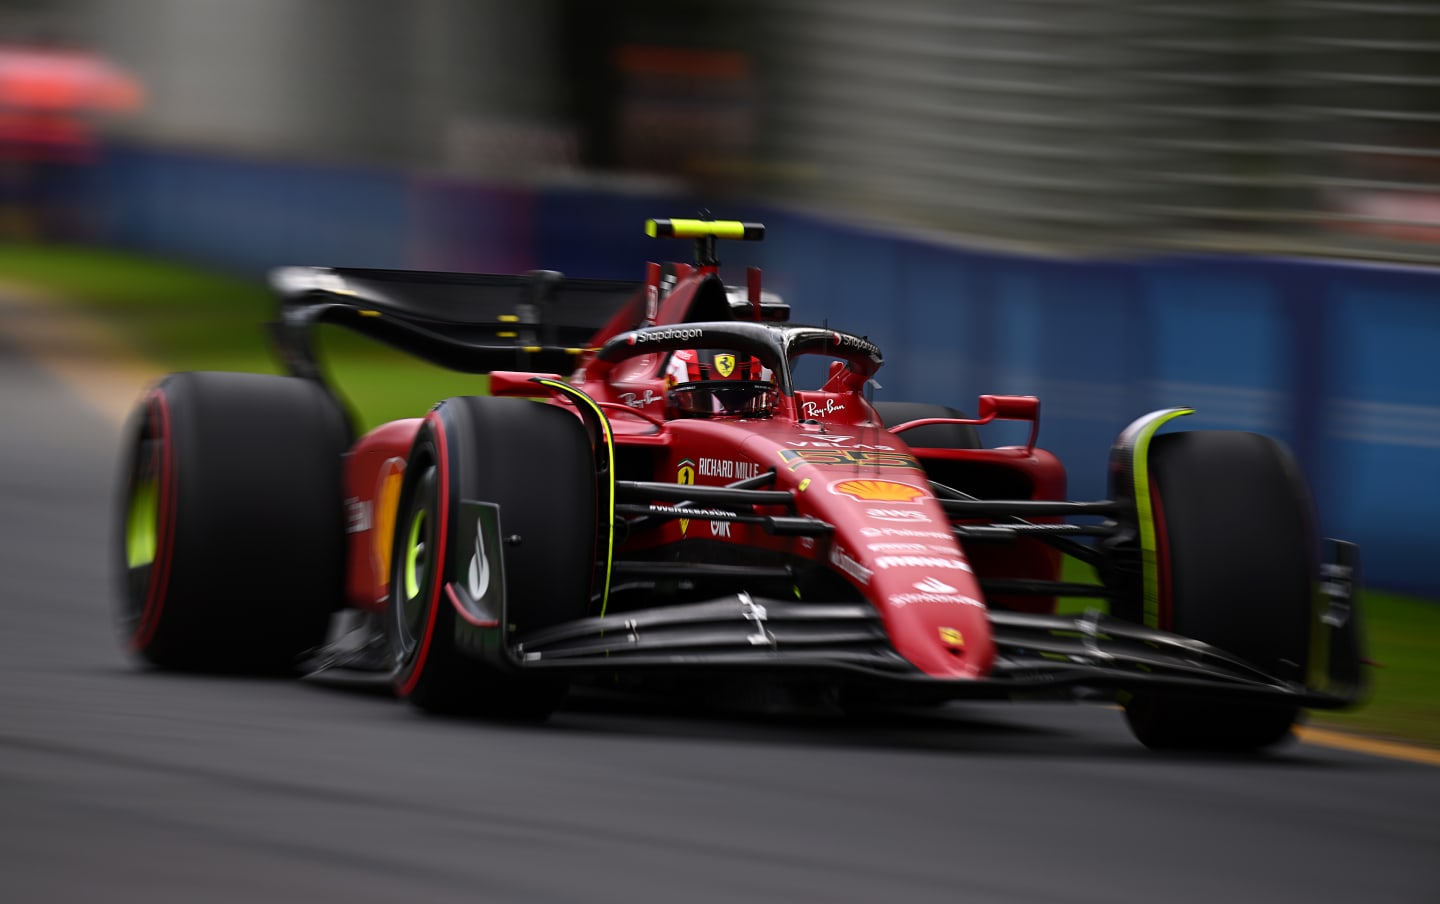 MELBOURNE, AUSTRALIA - APRIL 08: Carlos Sainz of Spain driving (55) the Ferrari F1-75 on track